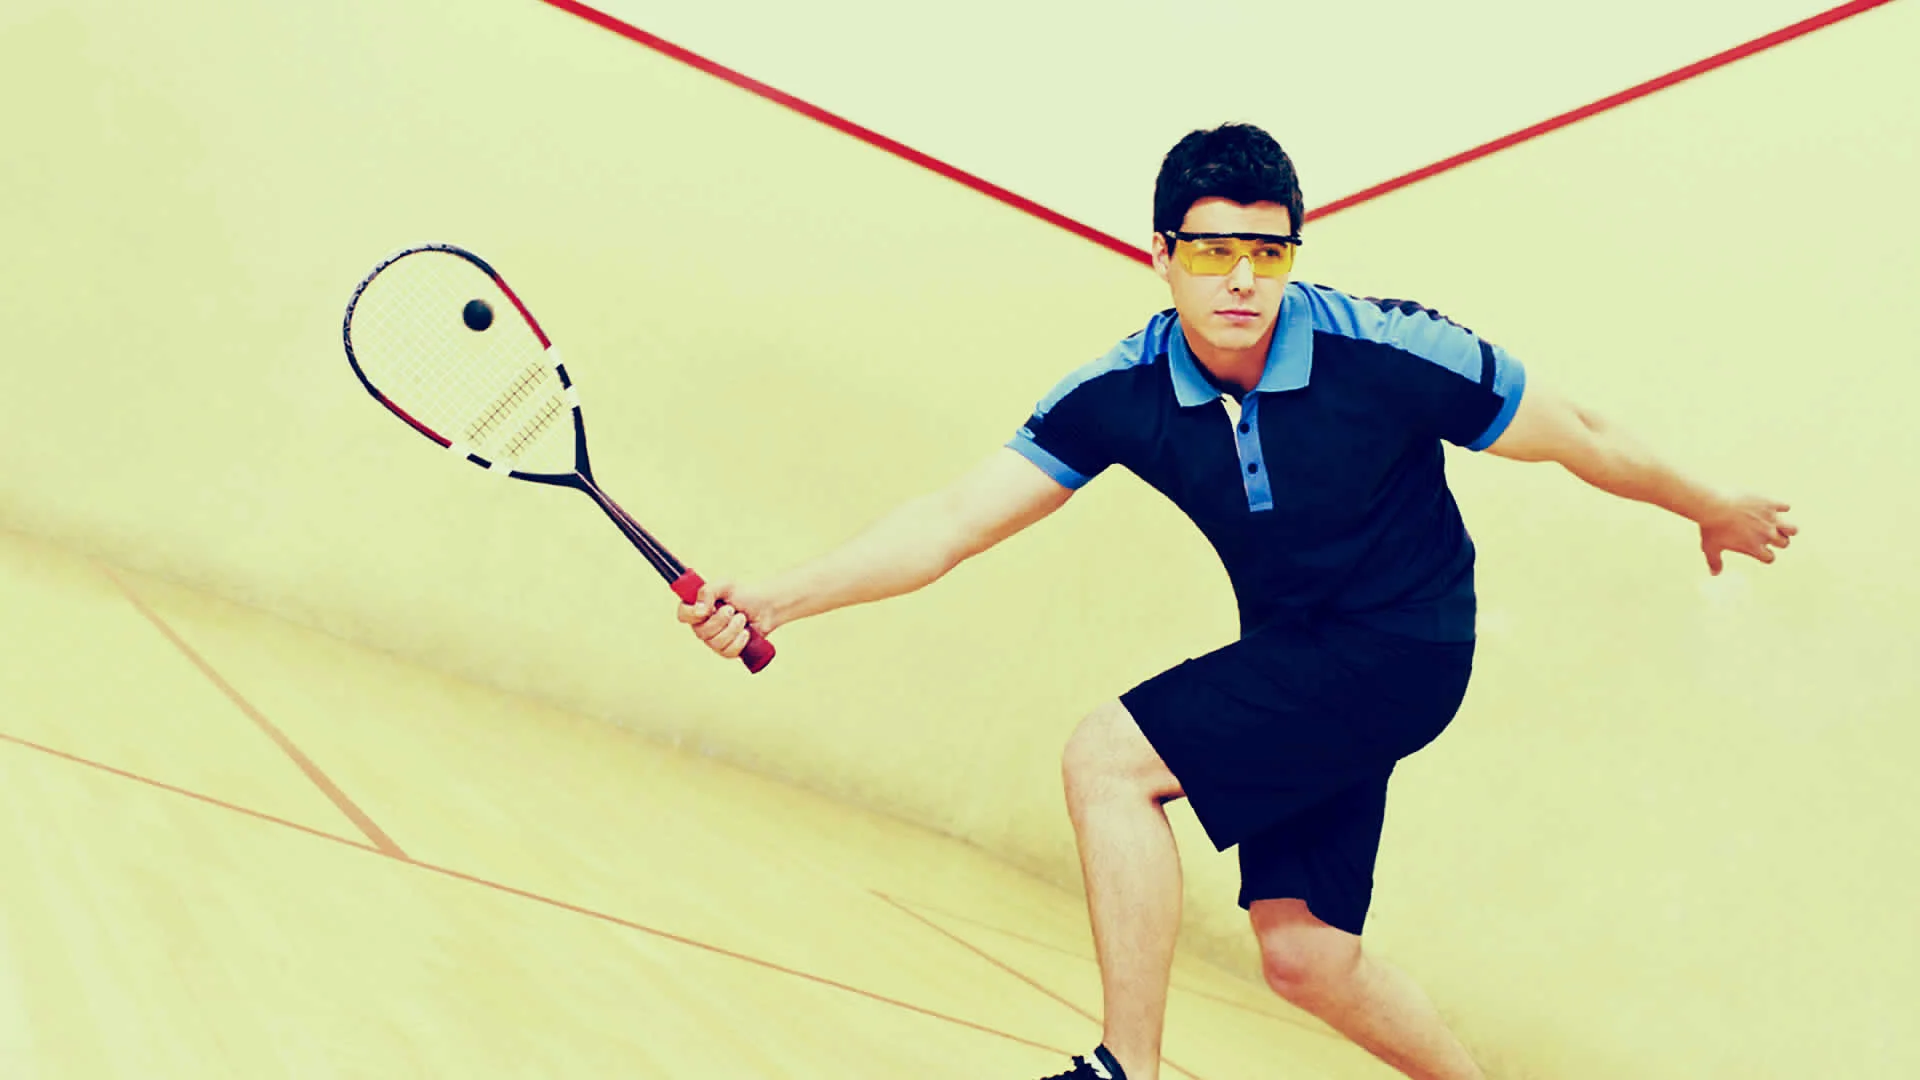 a squash player